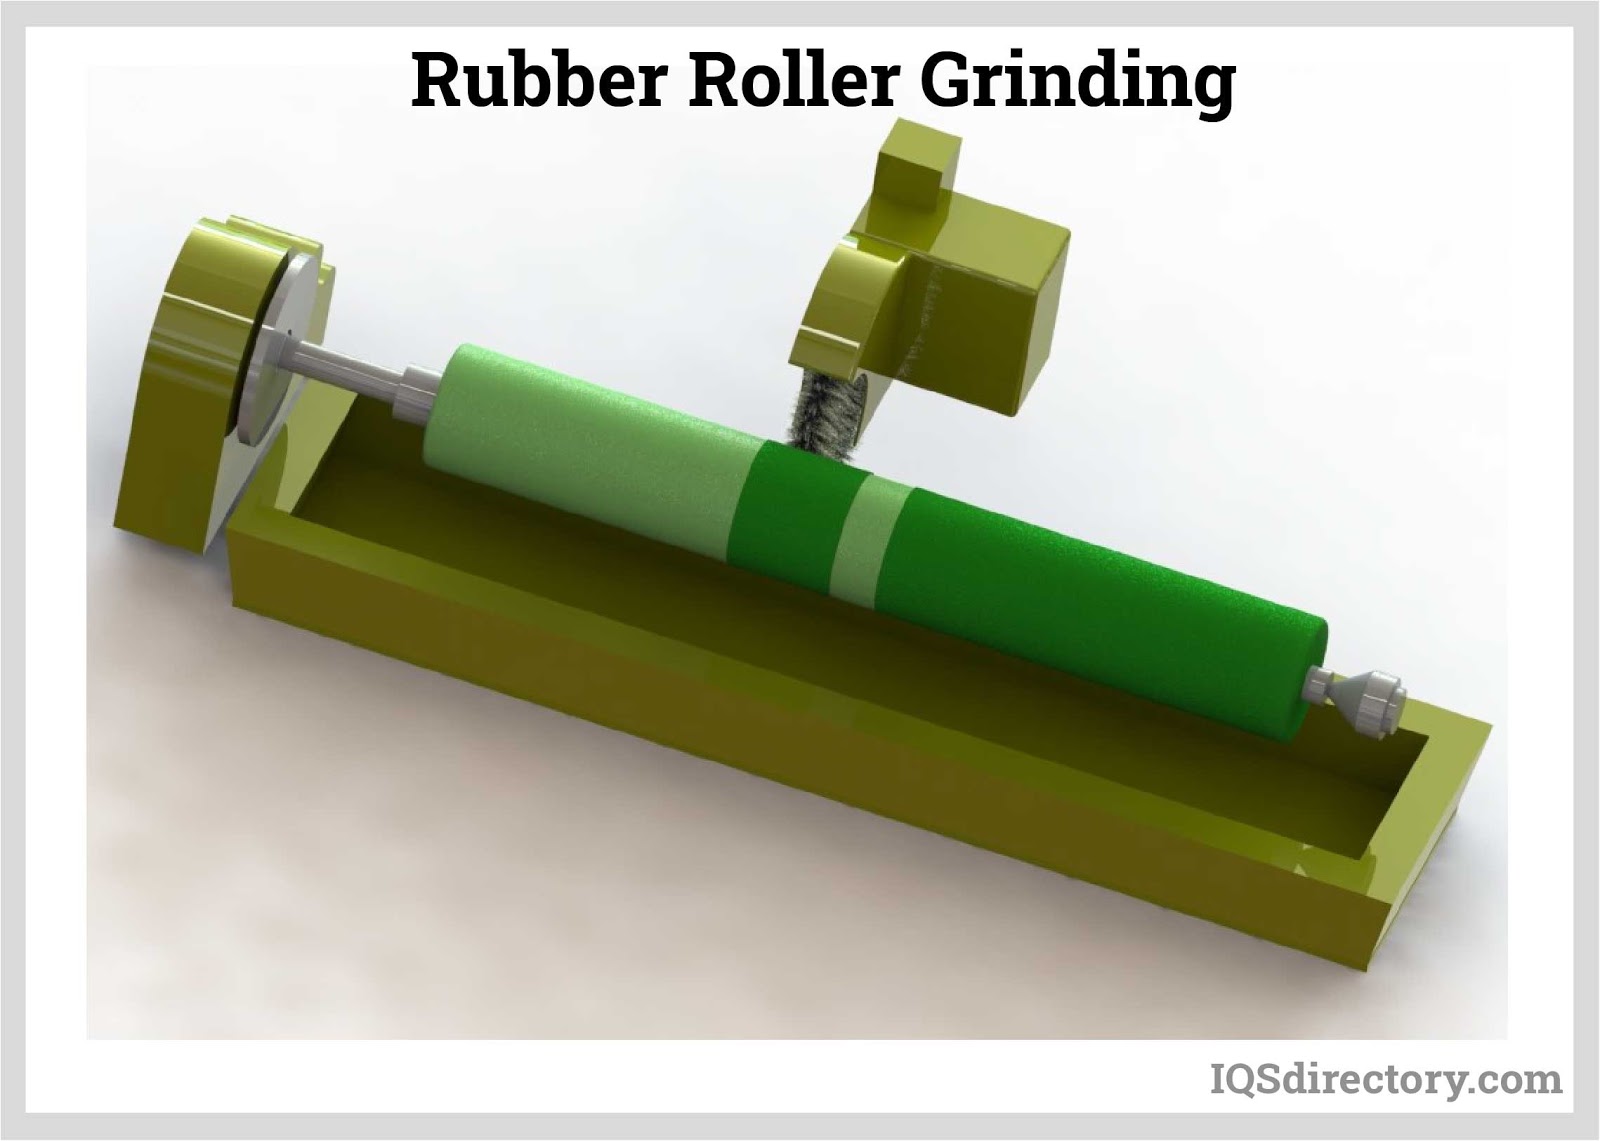 Rubber Roller Grinding